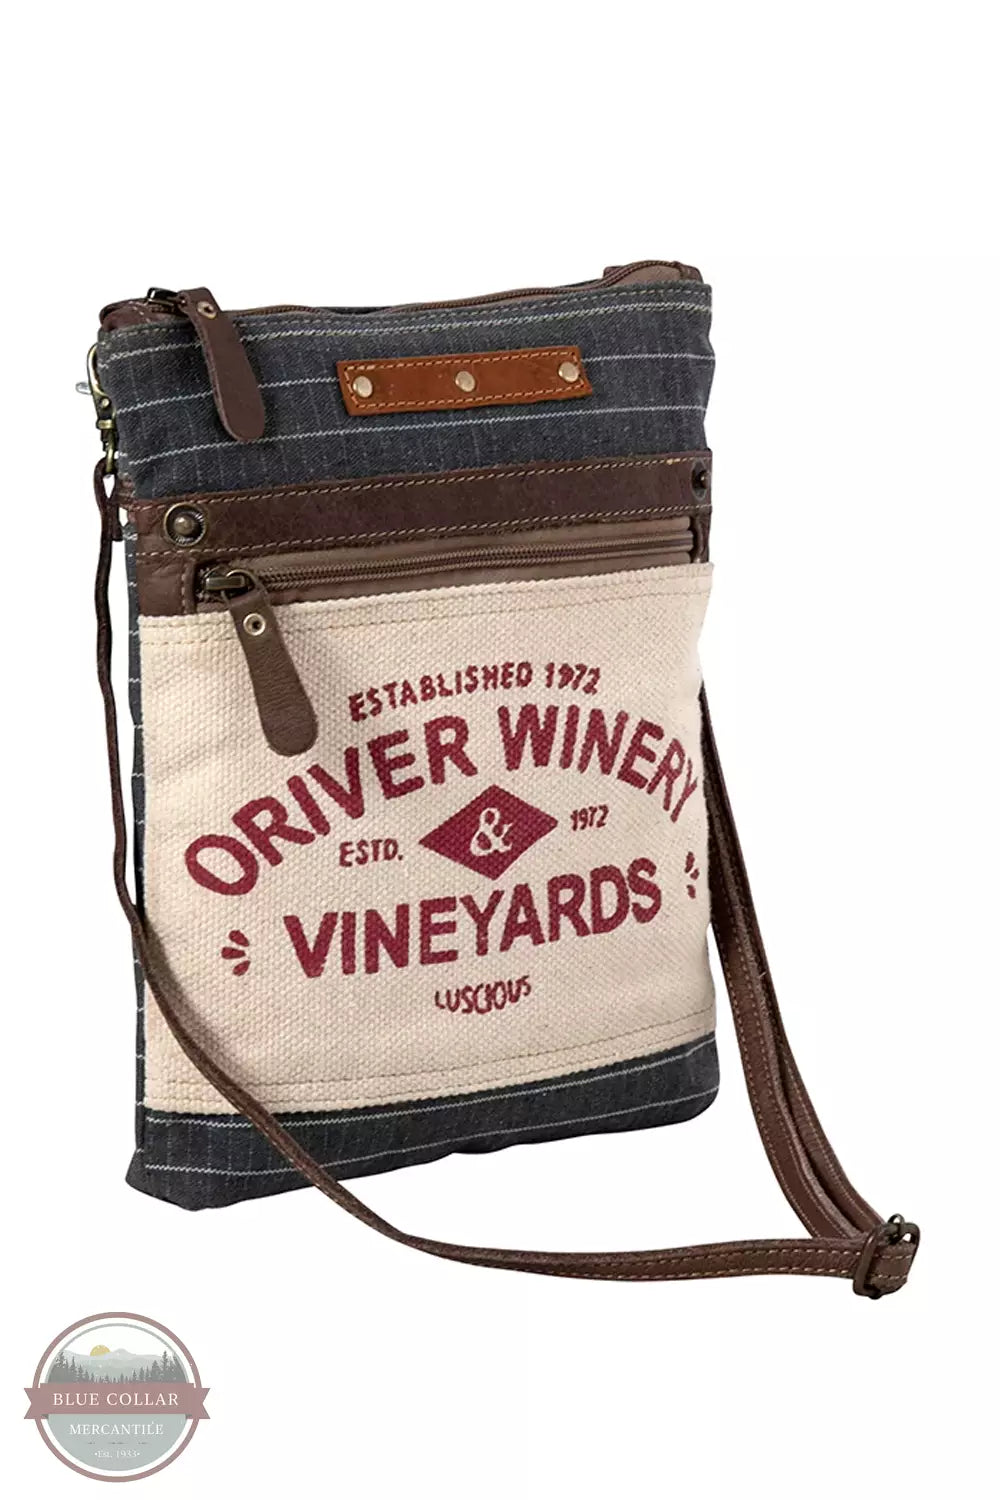 Myra Bag S-8401 Oriver Winery Small Crossbody Bag Profile View